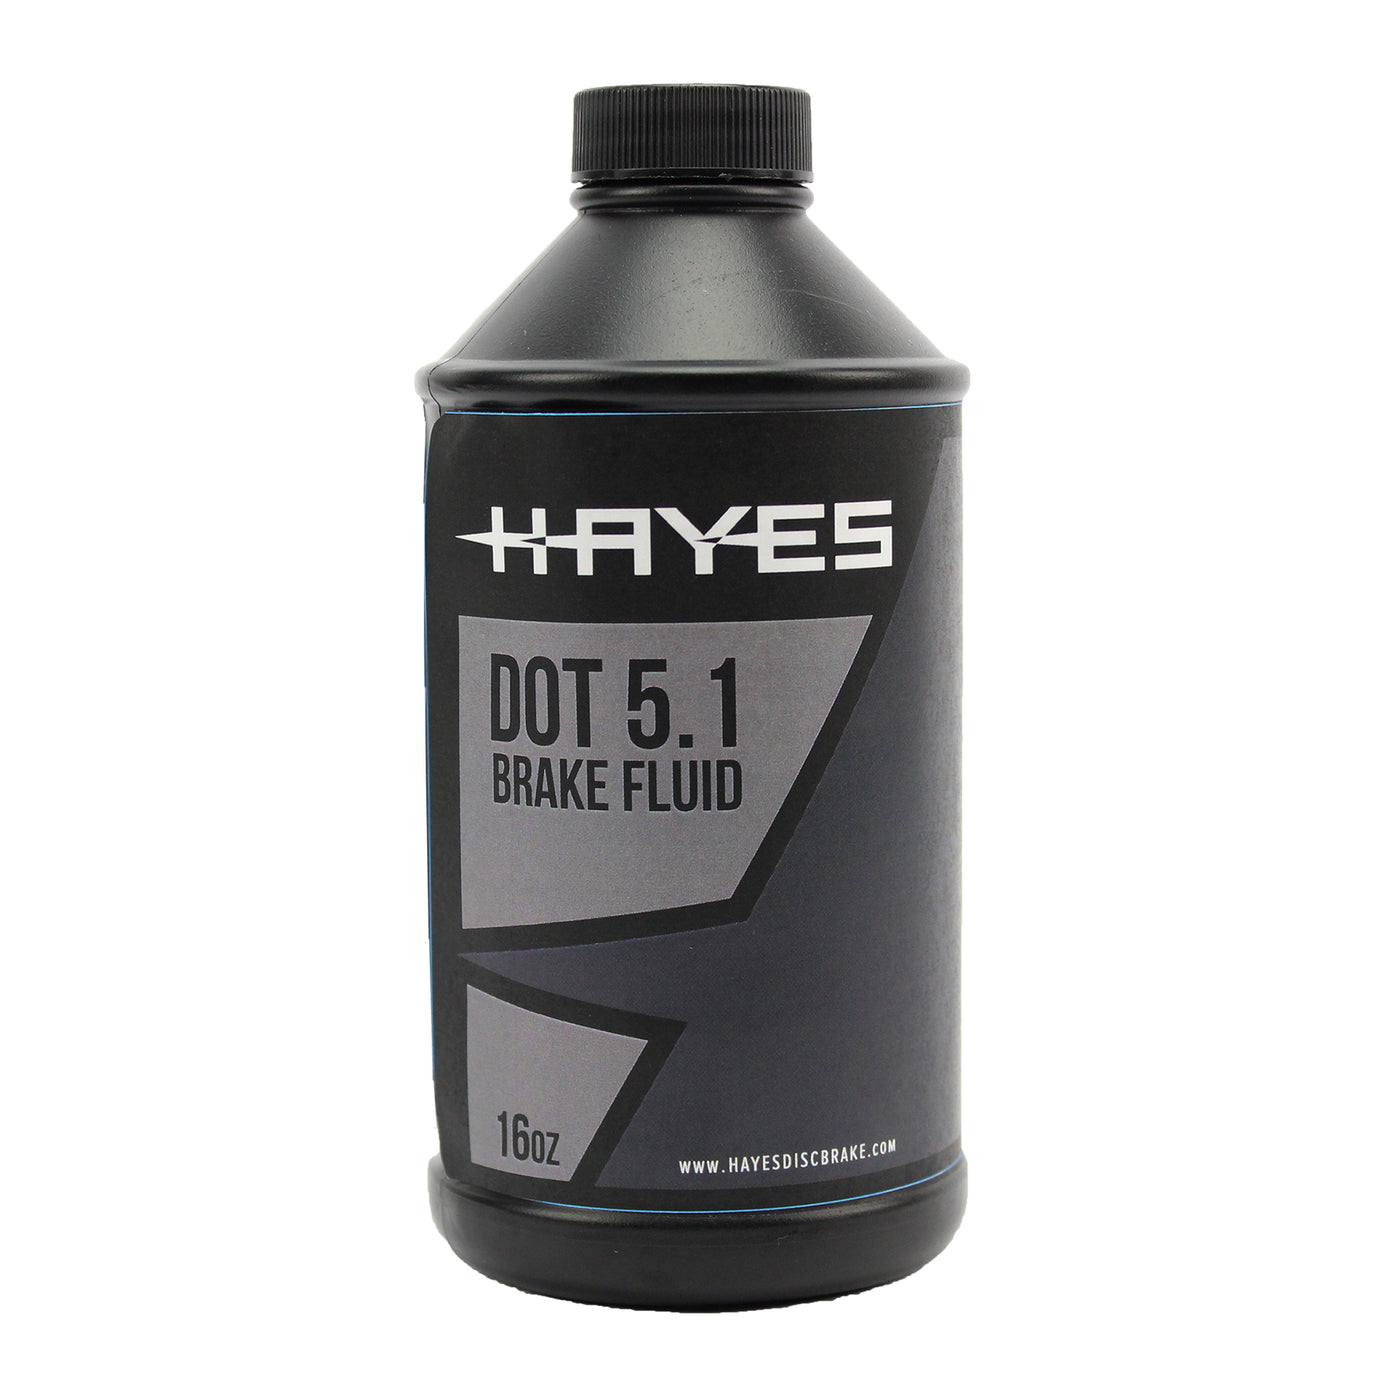 Hayes Disc Brakes | DOT 5.1 Brake Fluid, 16 OZ - Dot 5.1 Brake Fluid, 16 OZ